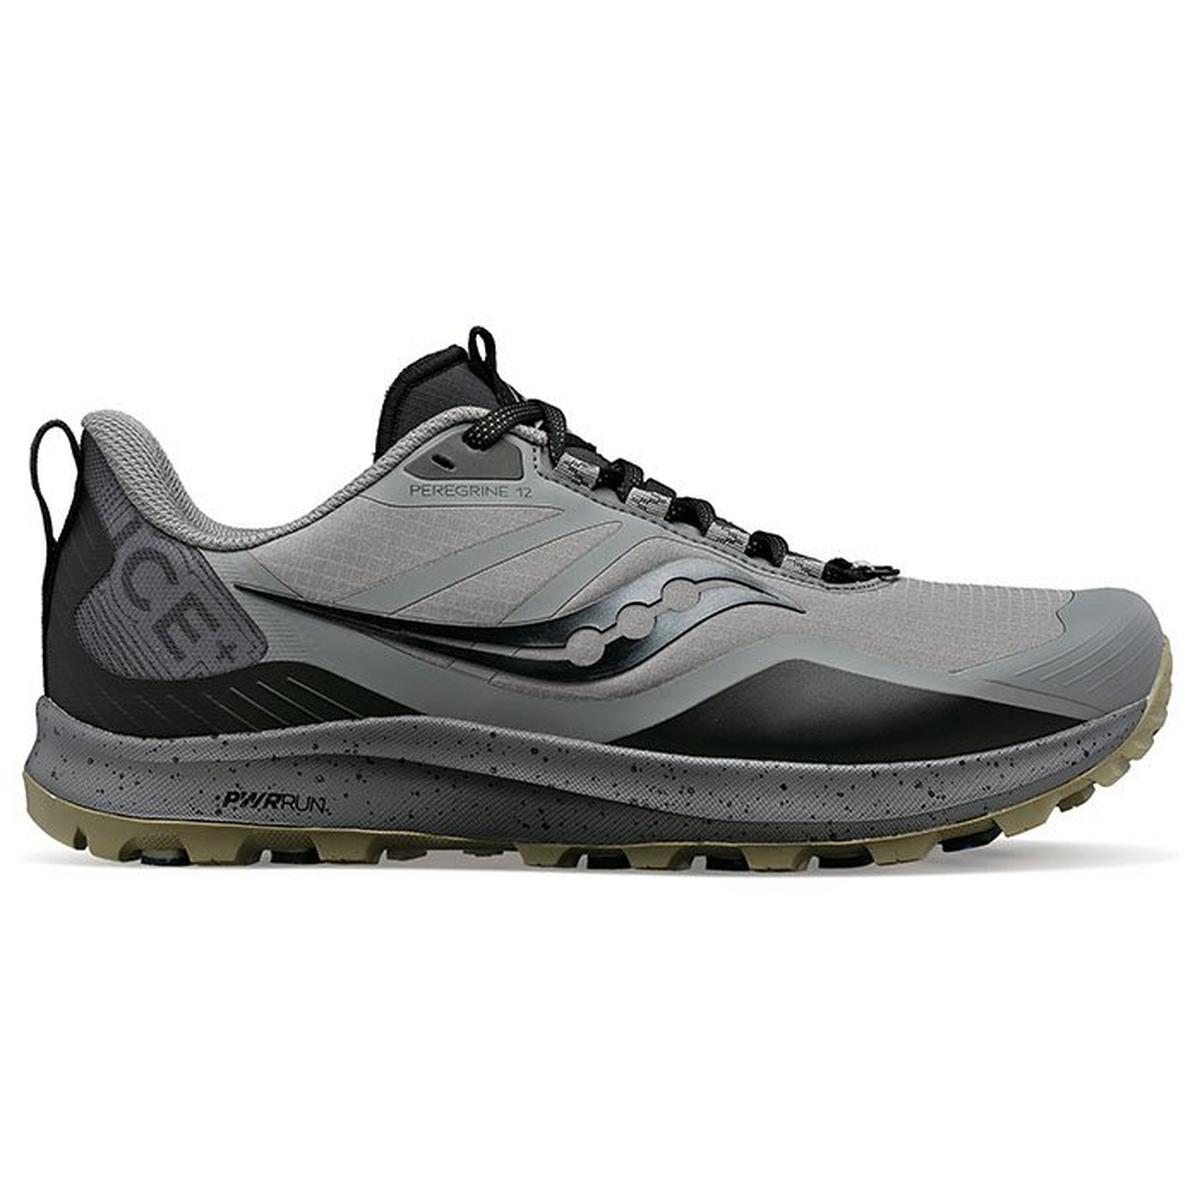 Men's Peregrine ICE+ 3 Trail Running Shoe